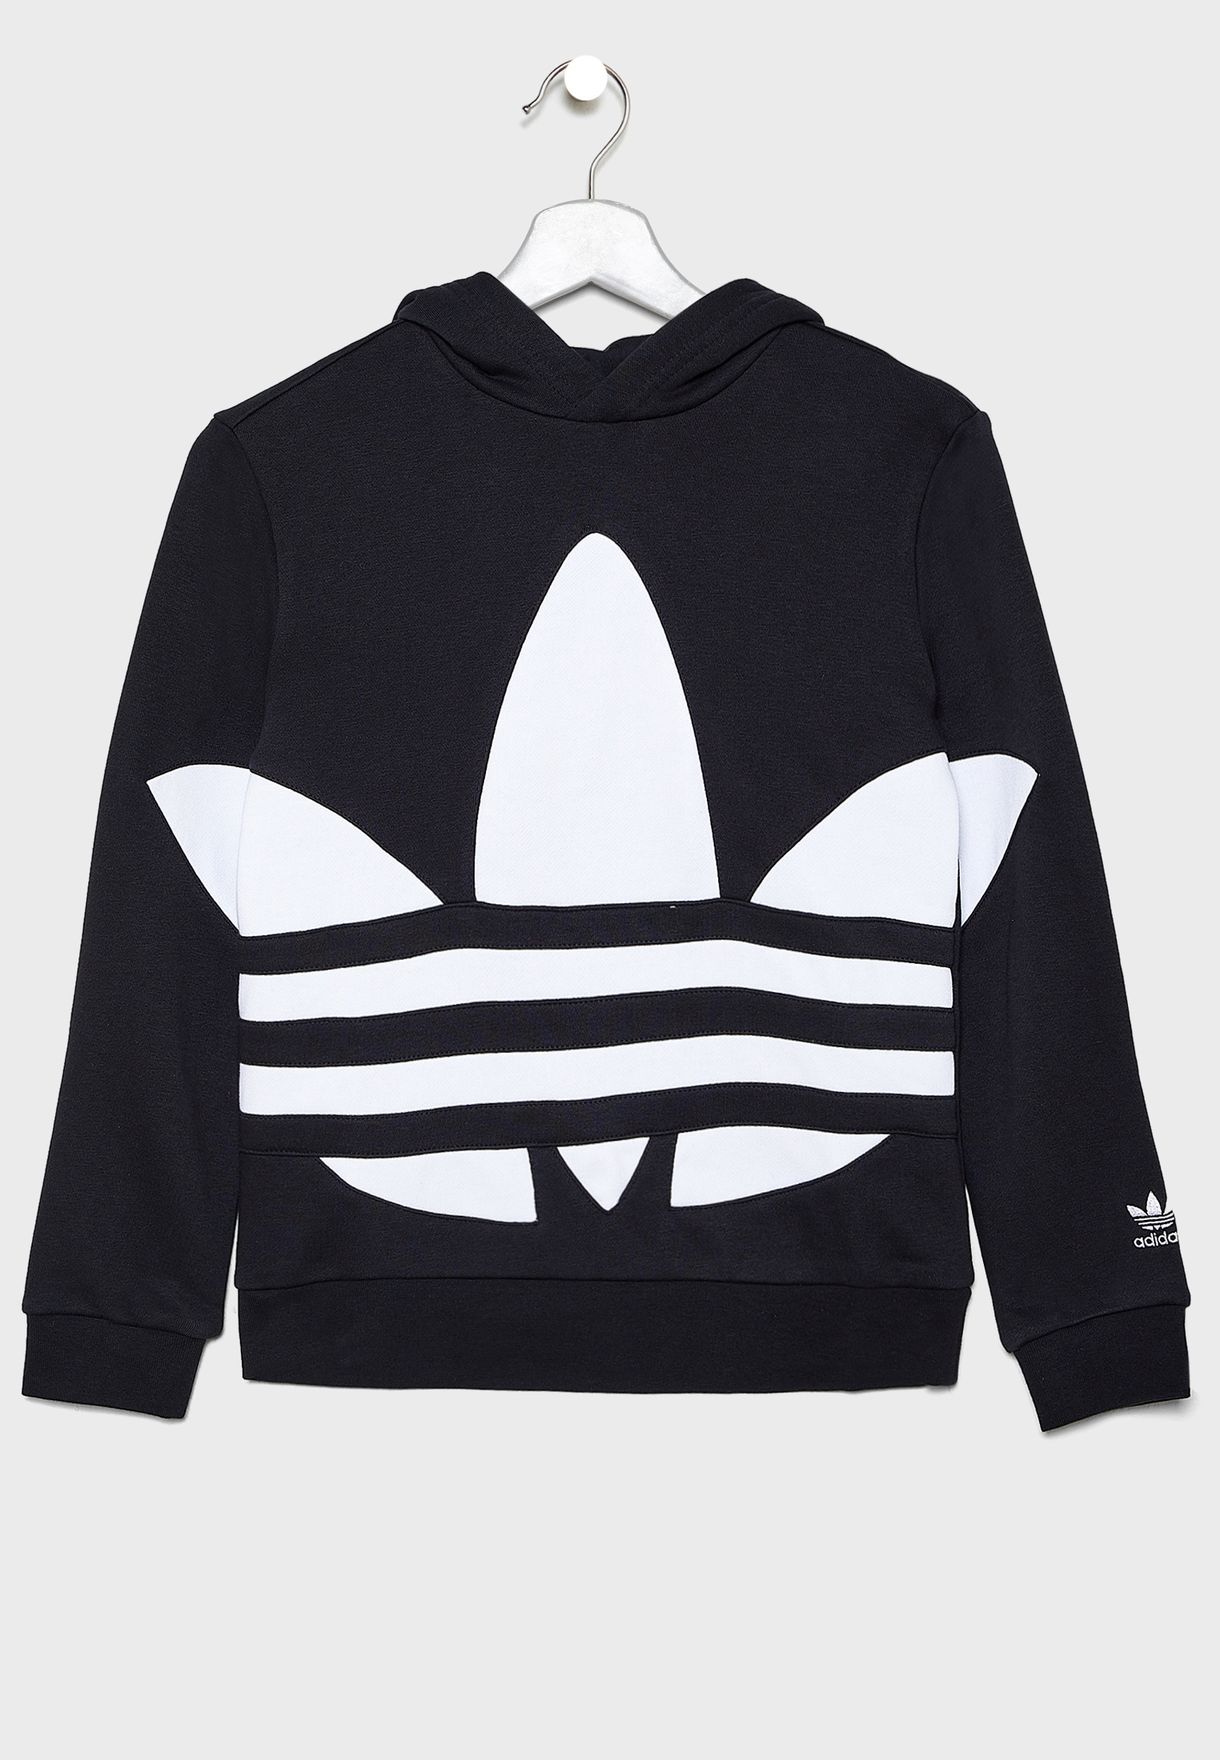 adidas youth trefoil hoodie